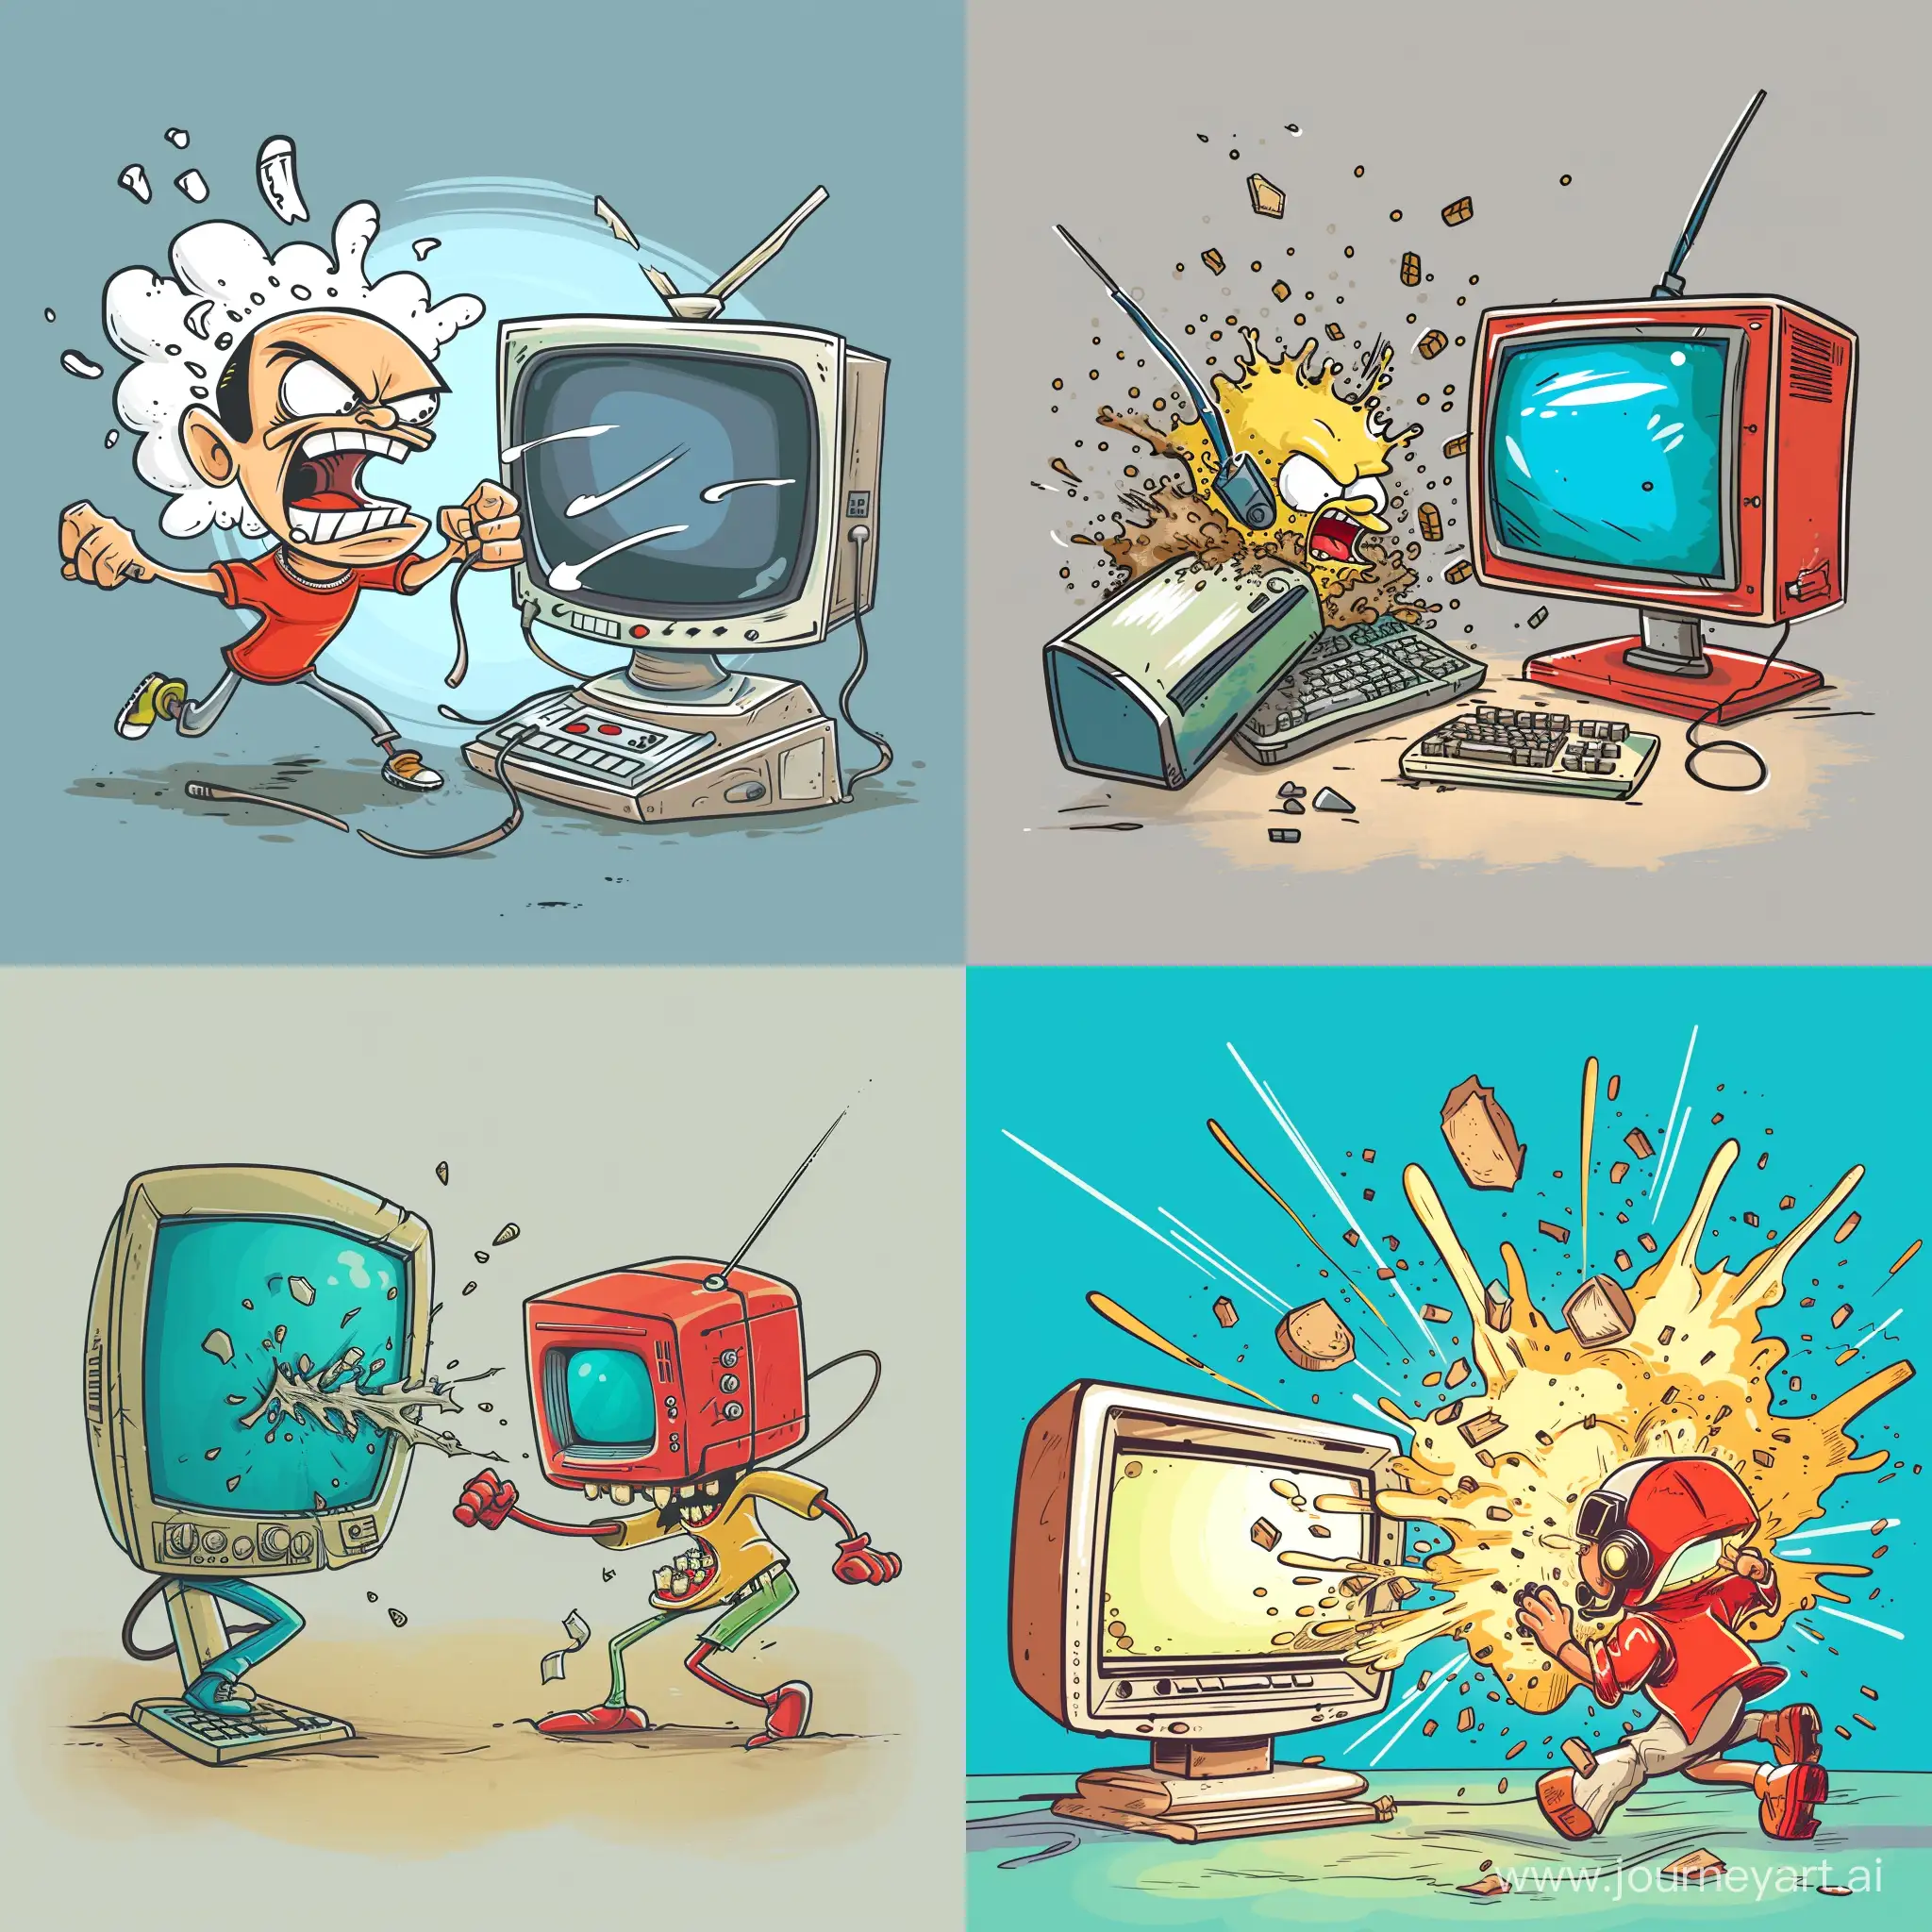 Epic-Cartoon-Battle-Computer-vs-Television